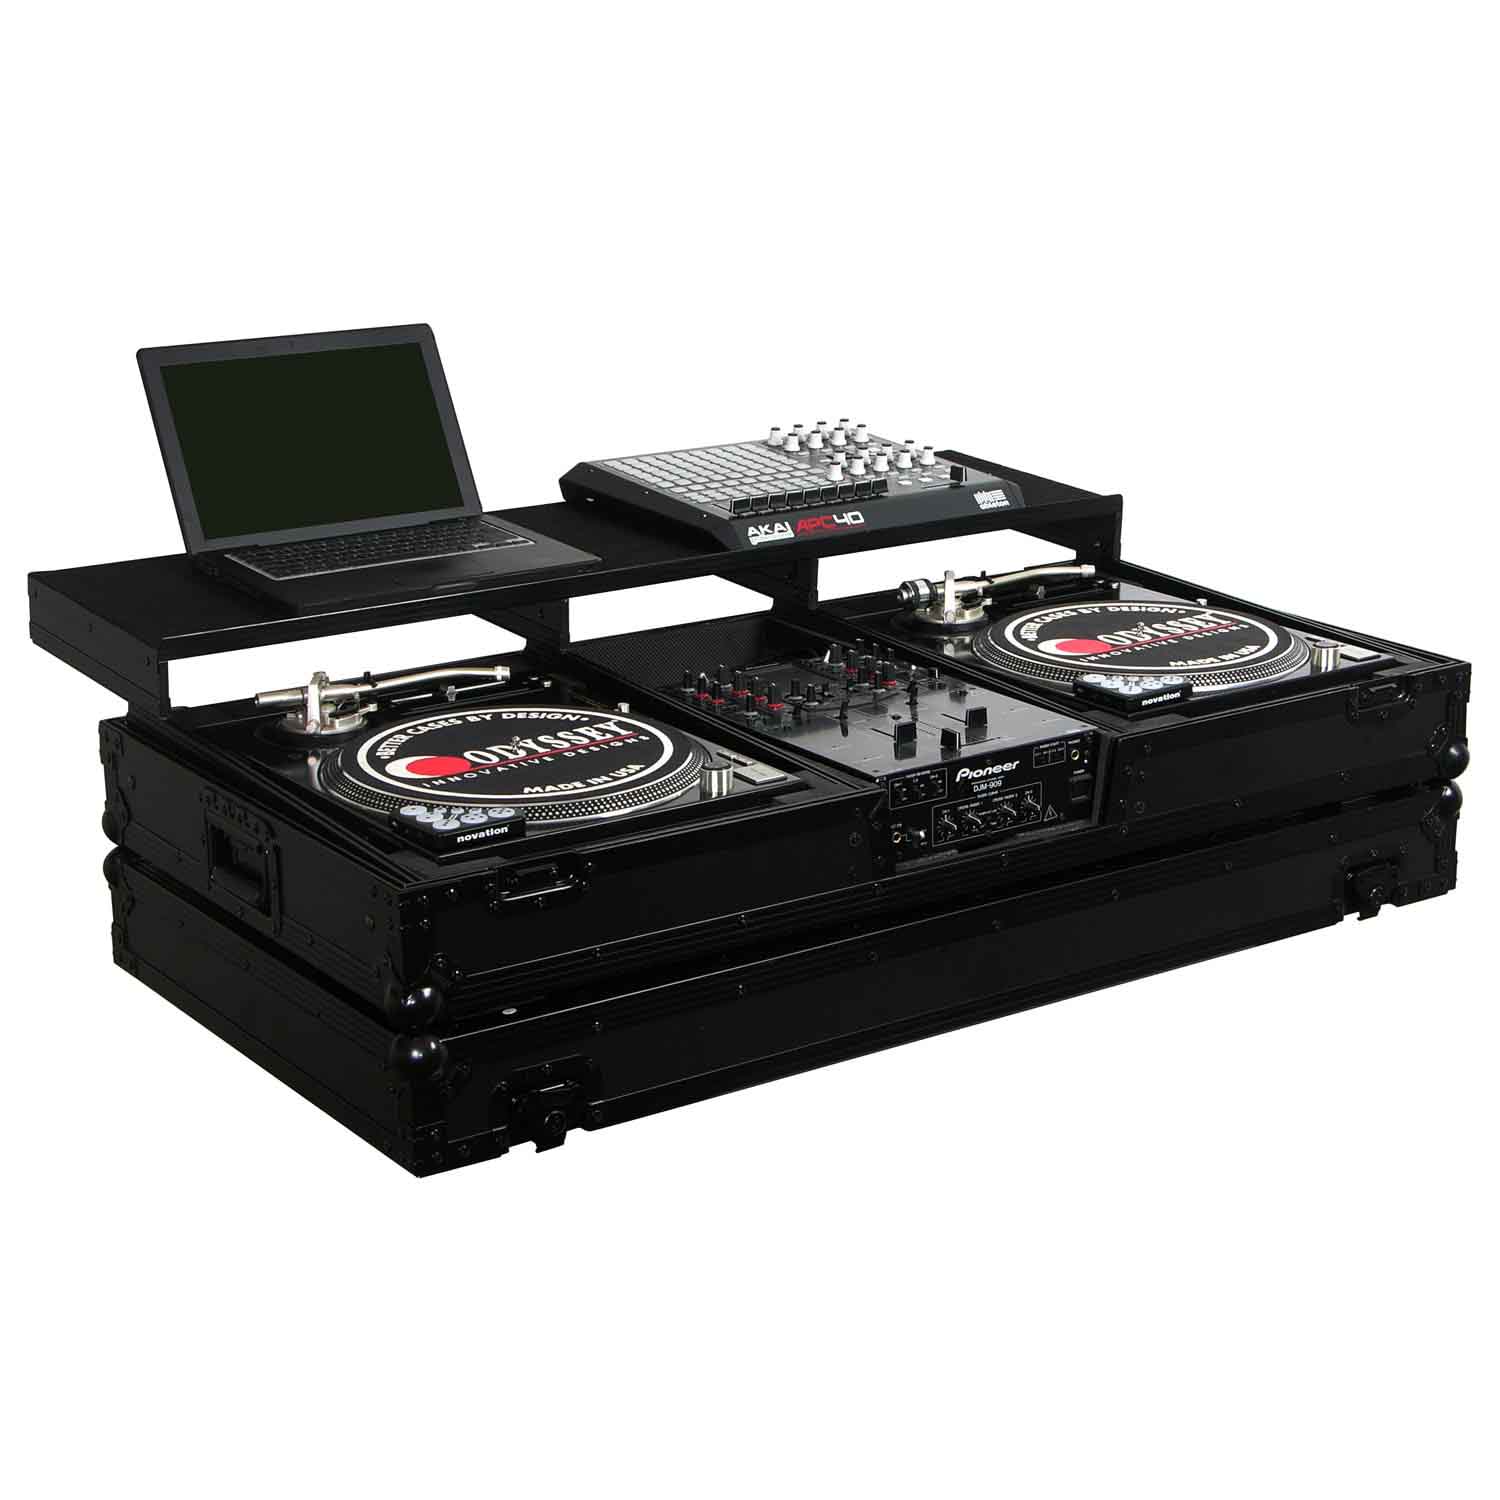 Odyssey FZGSPBM10WBL Universal DJ Flight Coffin Case for 10″ Format DJ Mixer and Two Battle Position Turntables - Black - Hollywood DJ